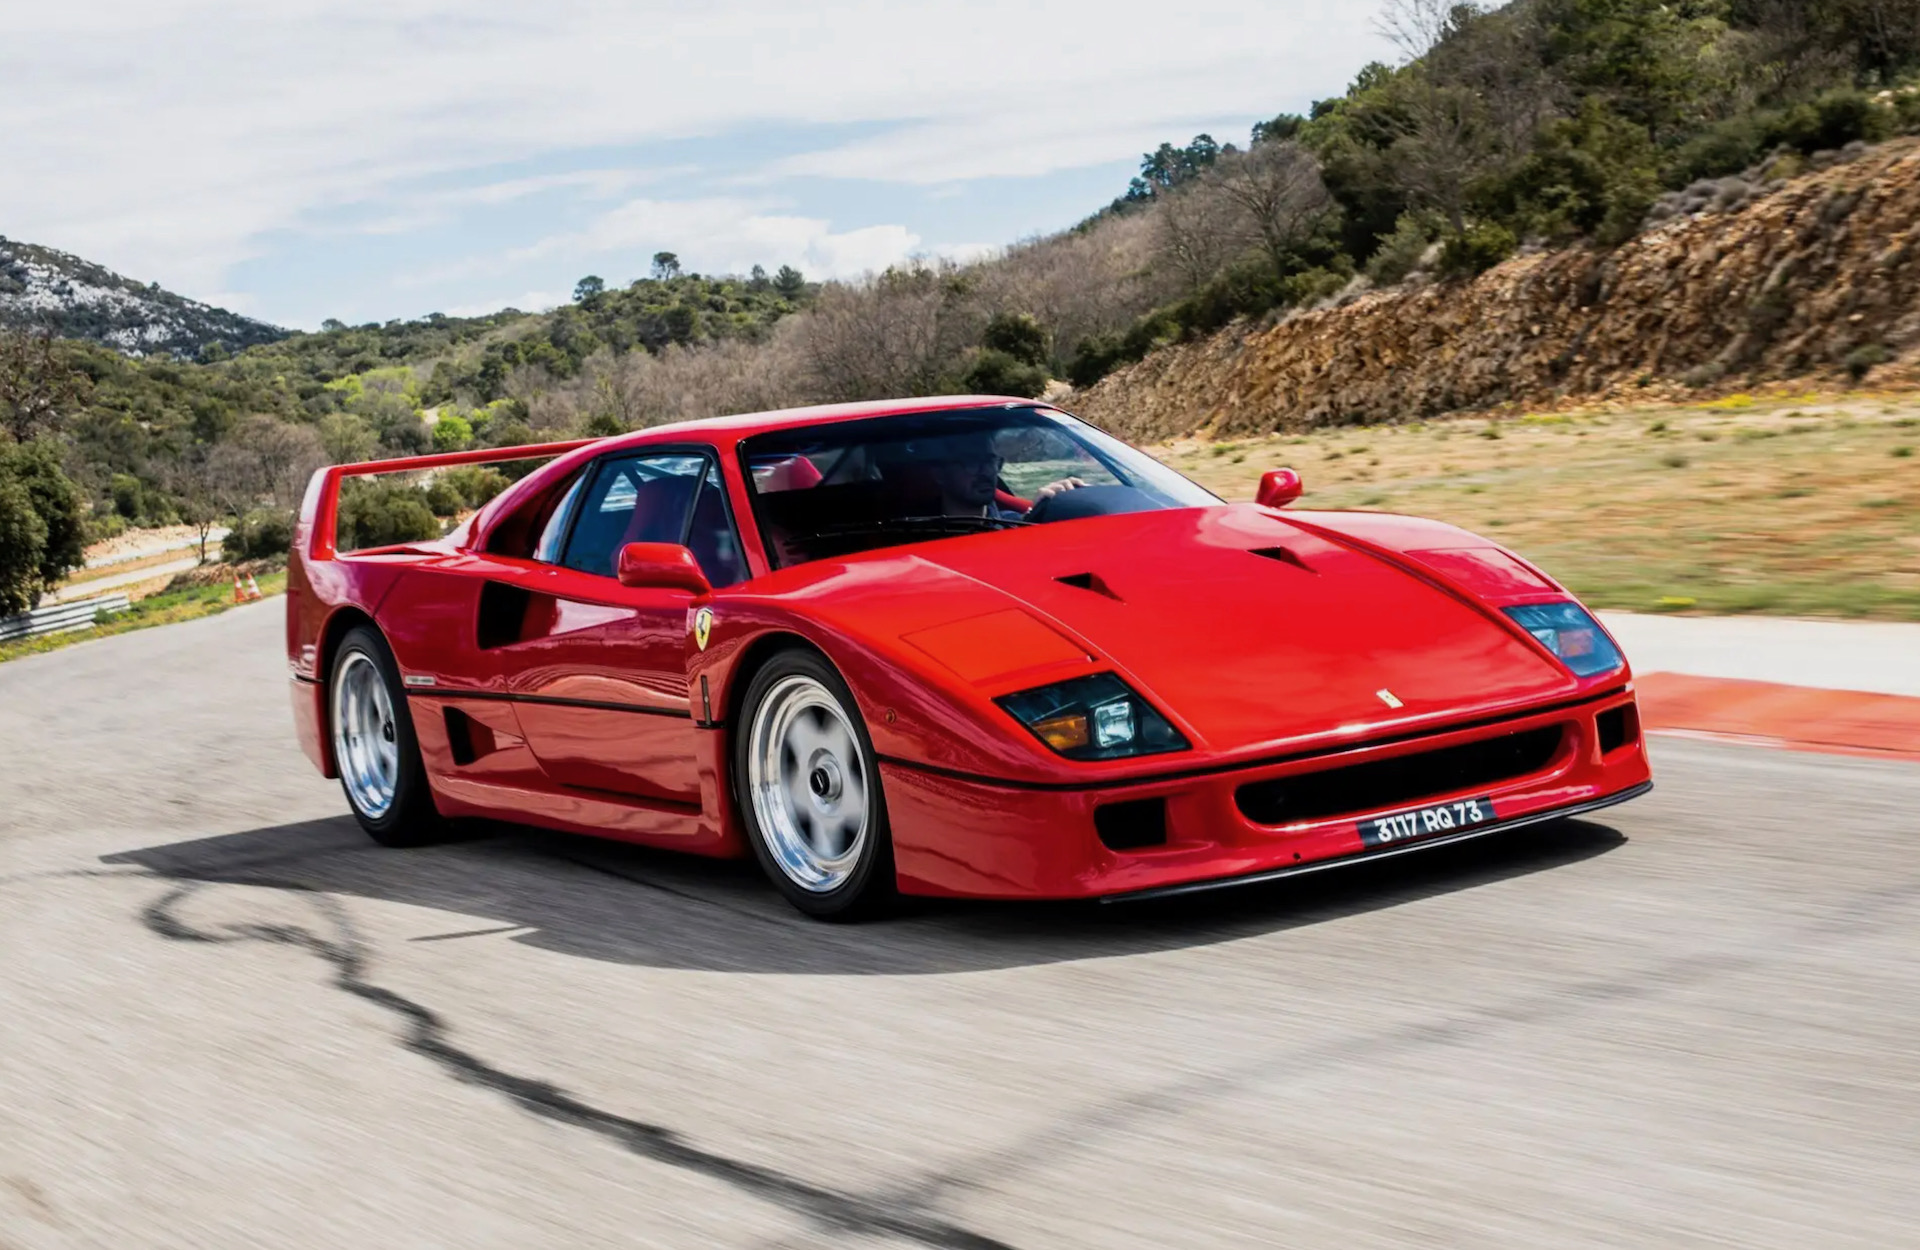 For Sale: Ferrari F40 originally owned by Alain Prost